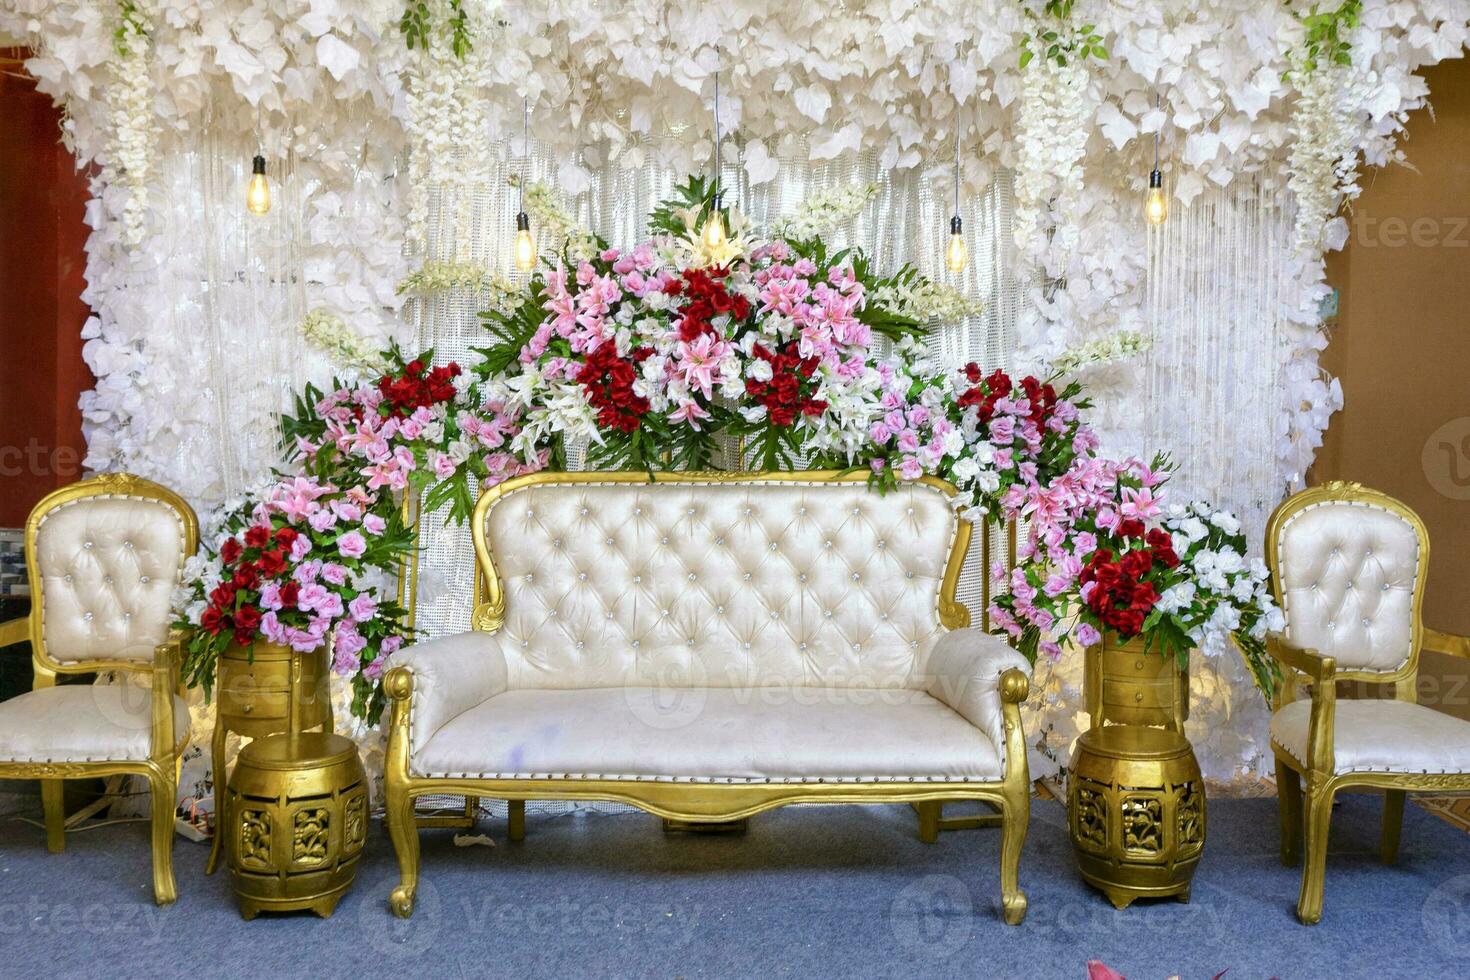 White wedding chair wedding decoration photo